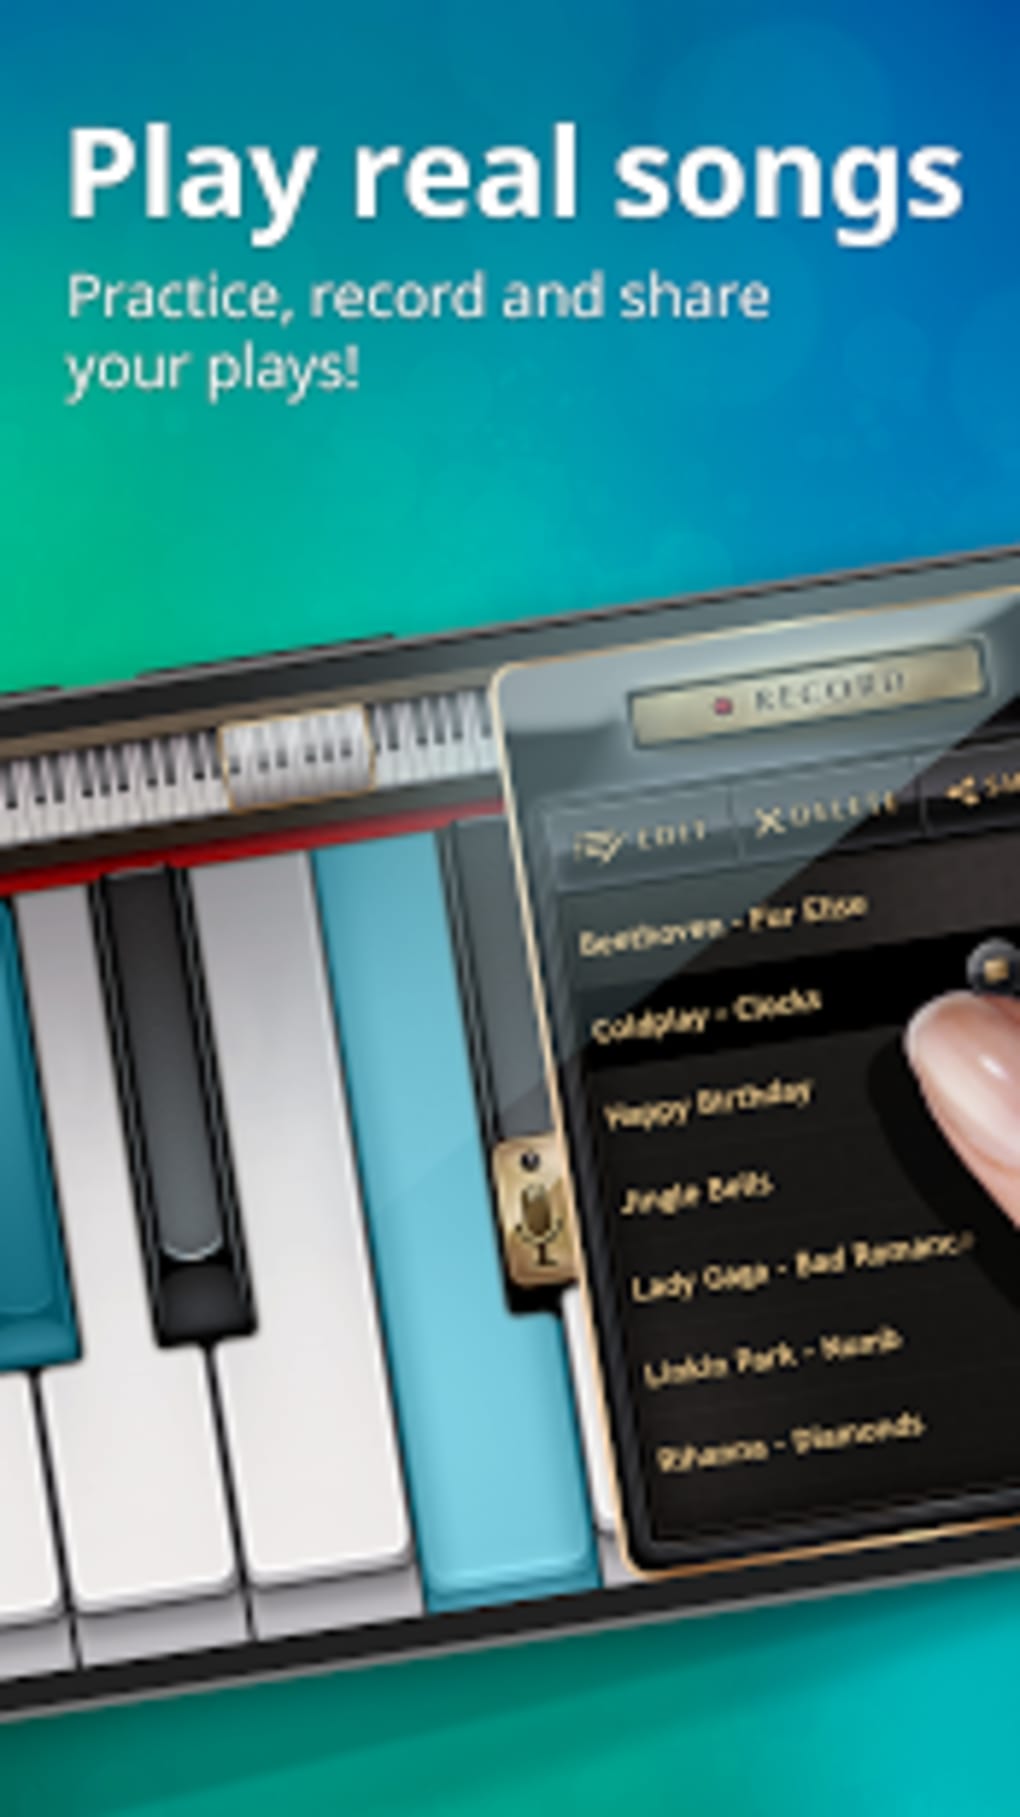 Baixar Piano Tiles 2 3.1 Android - Download APK Grátis